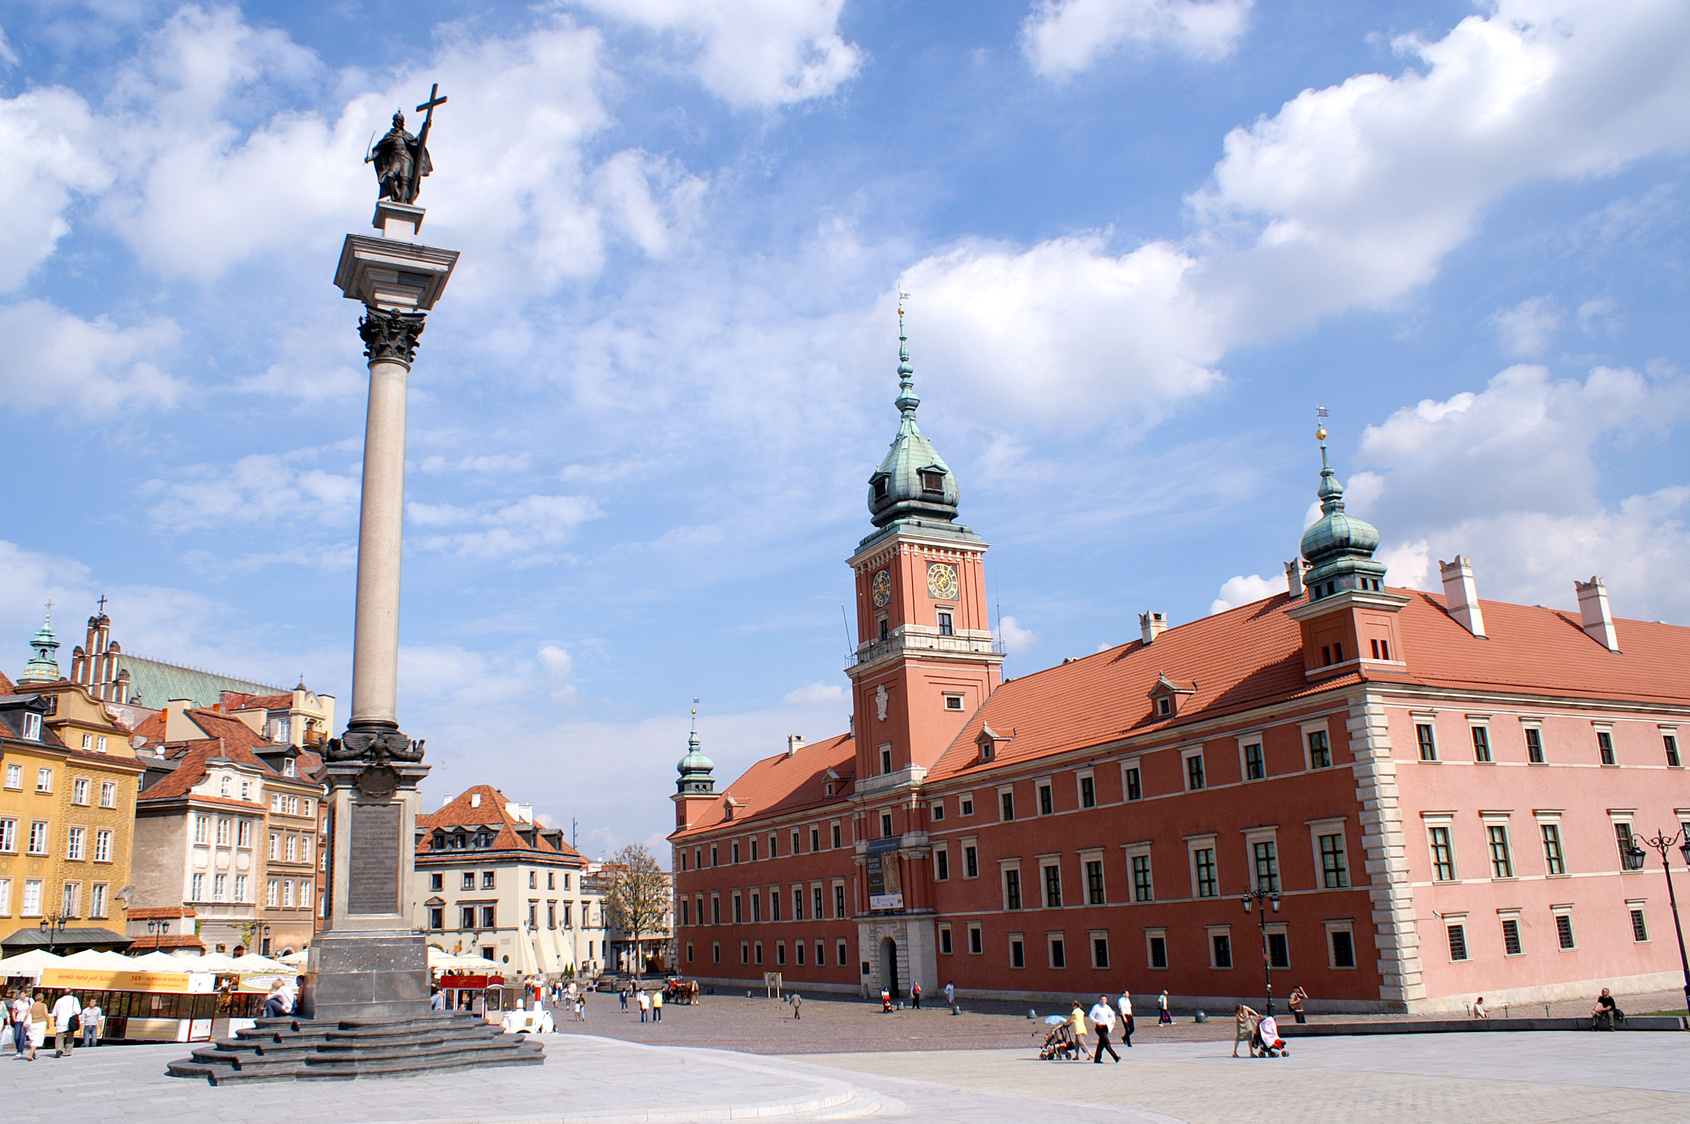 Travel tips: Explore Warsaw